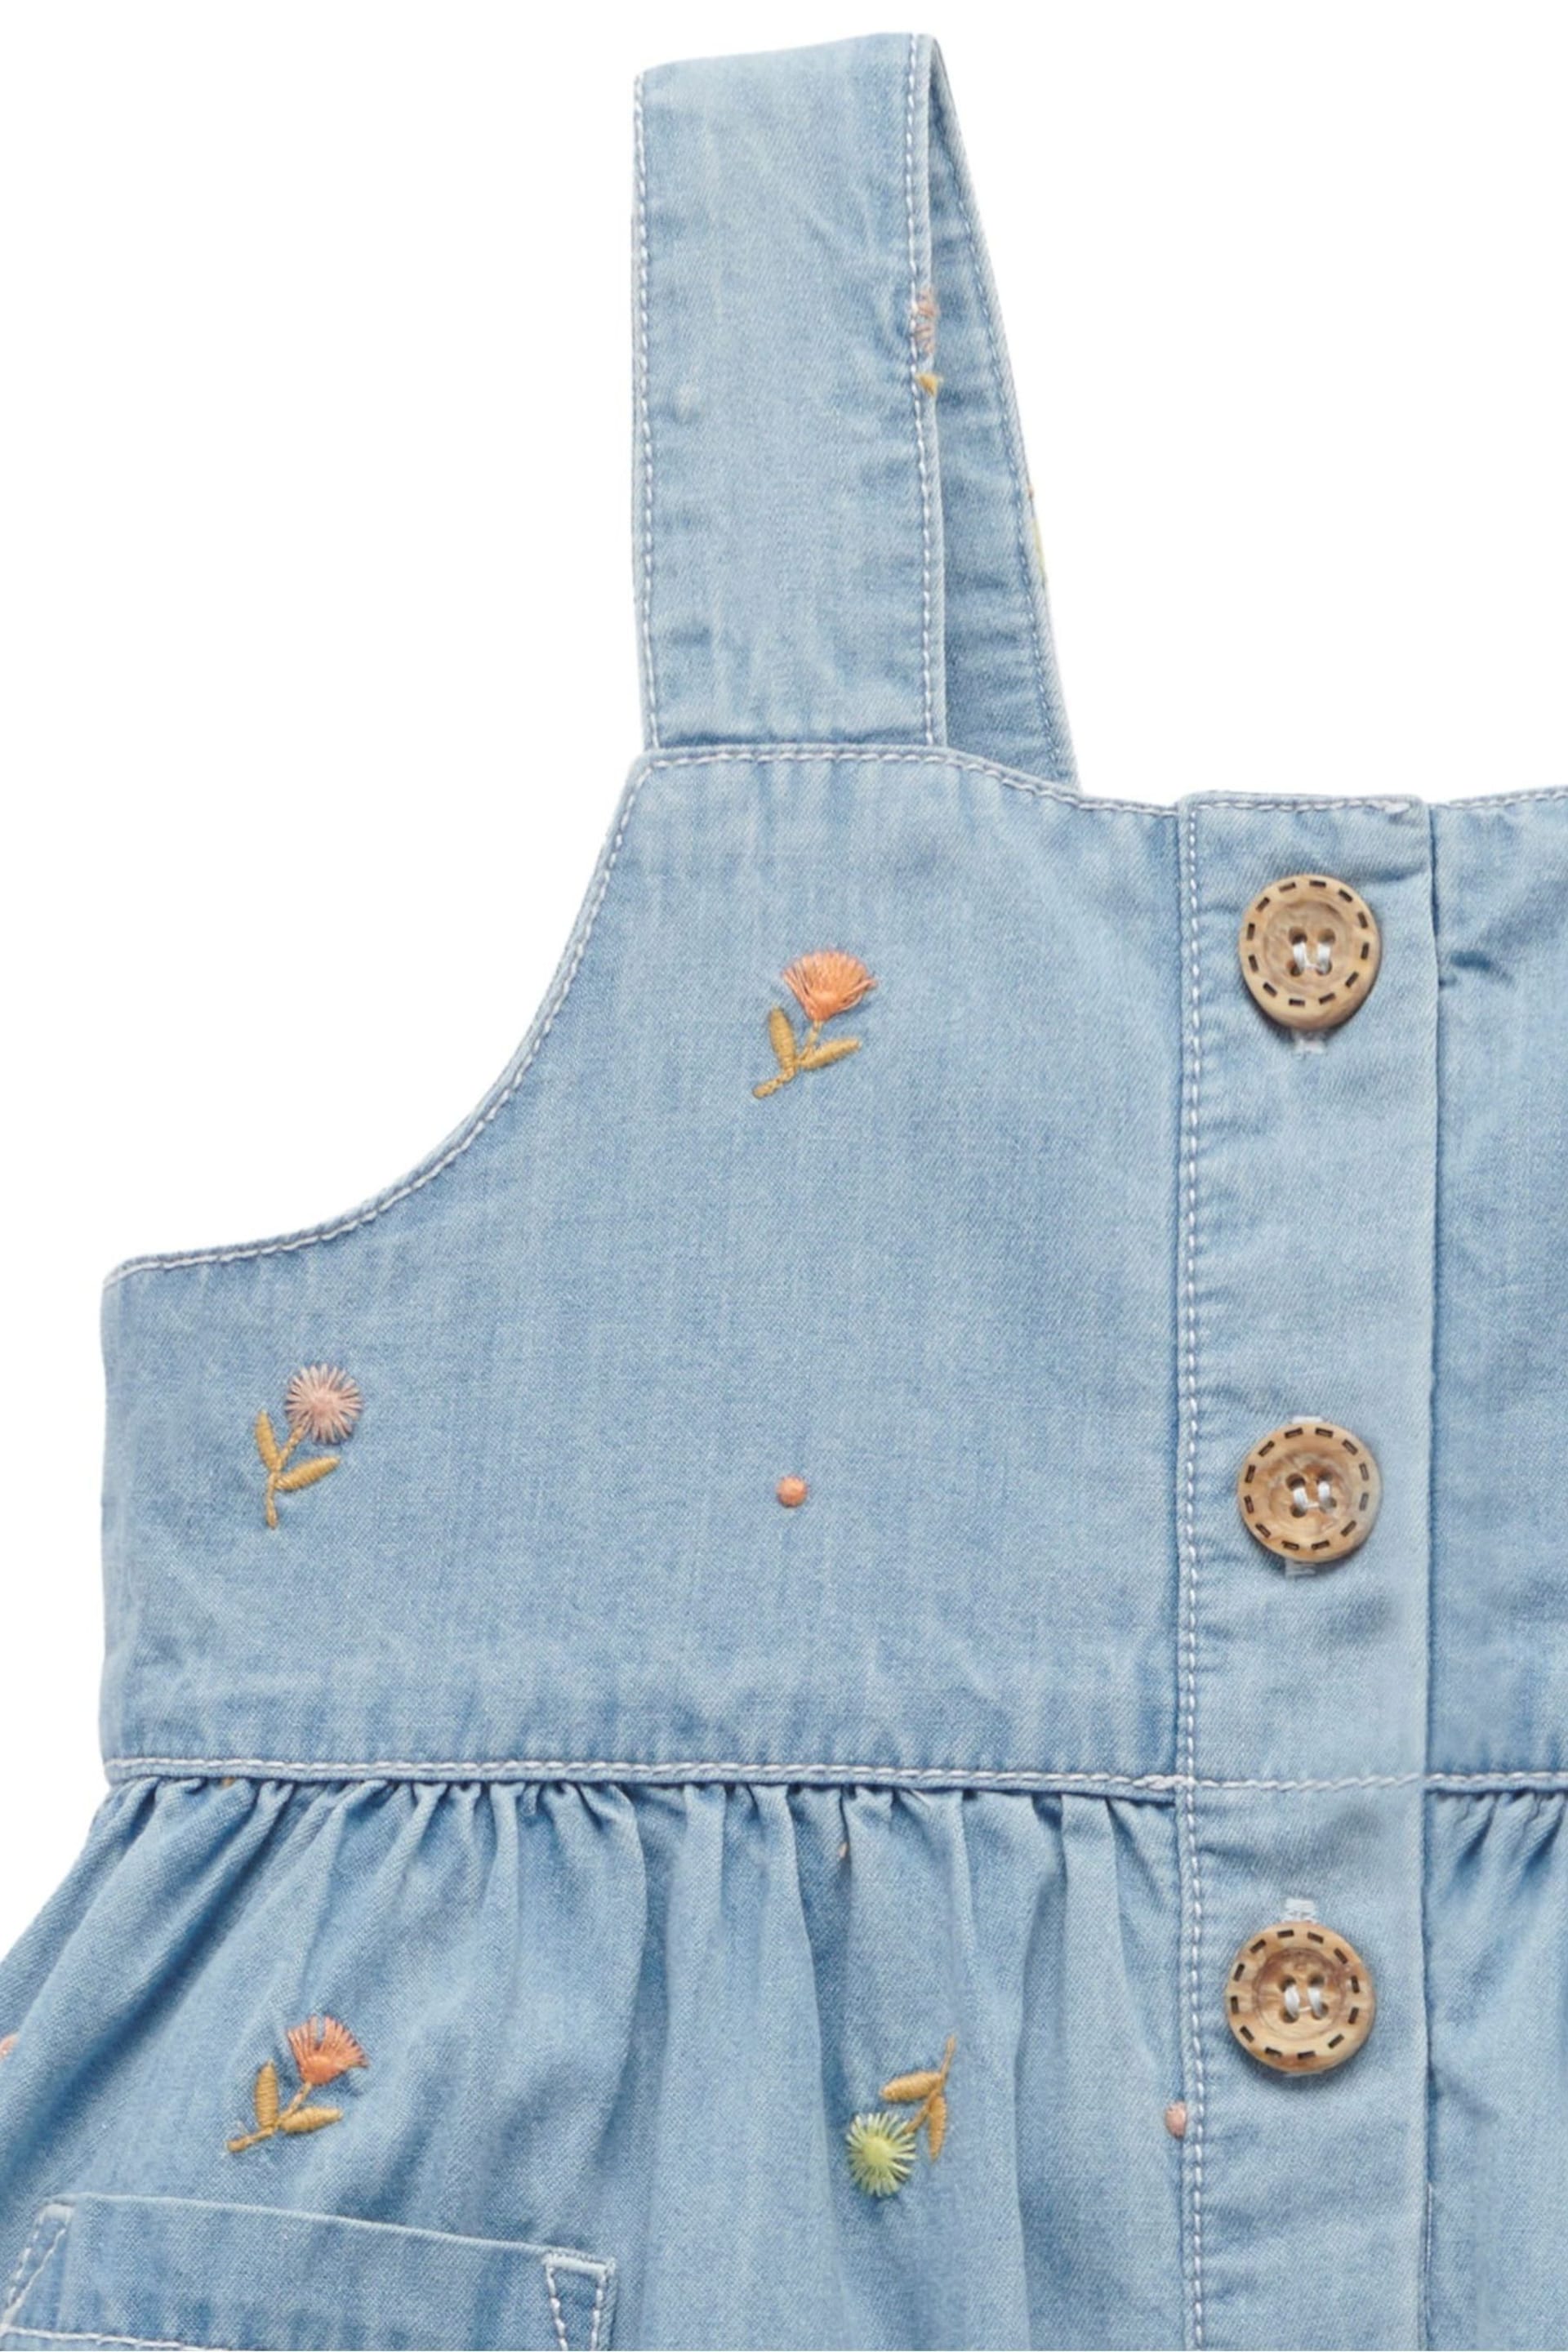 Purebaby Blue Denim Embroidered Dress - Image 3 of 6